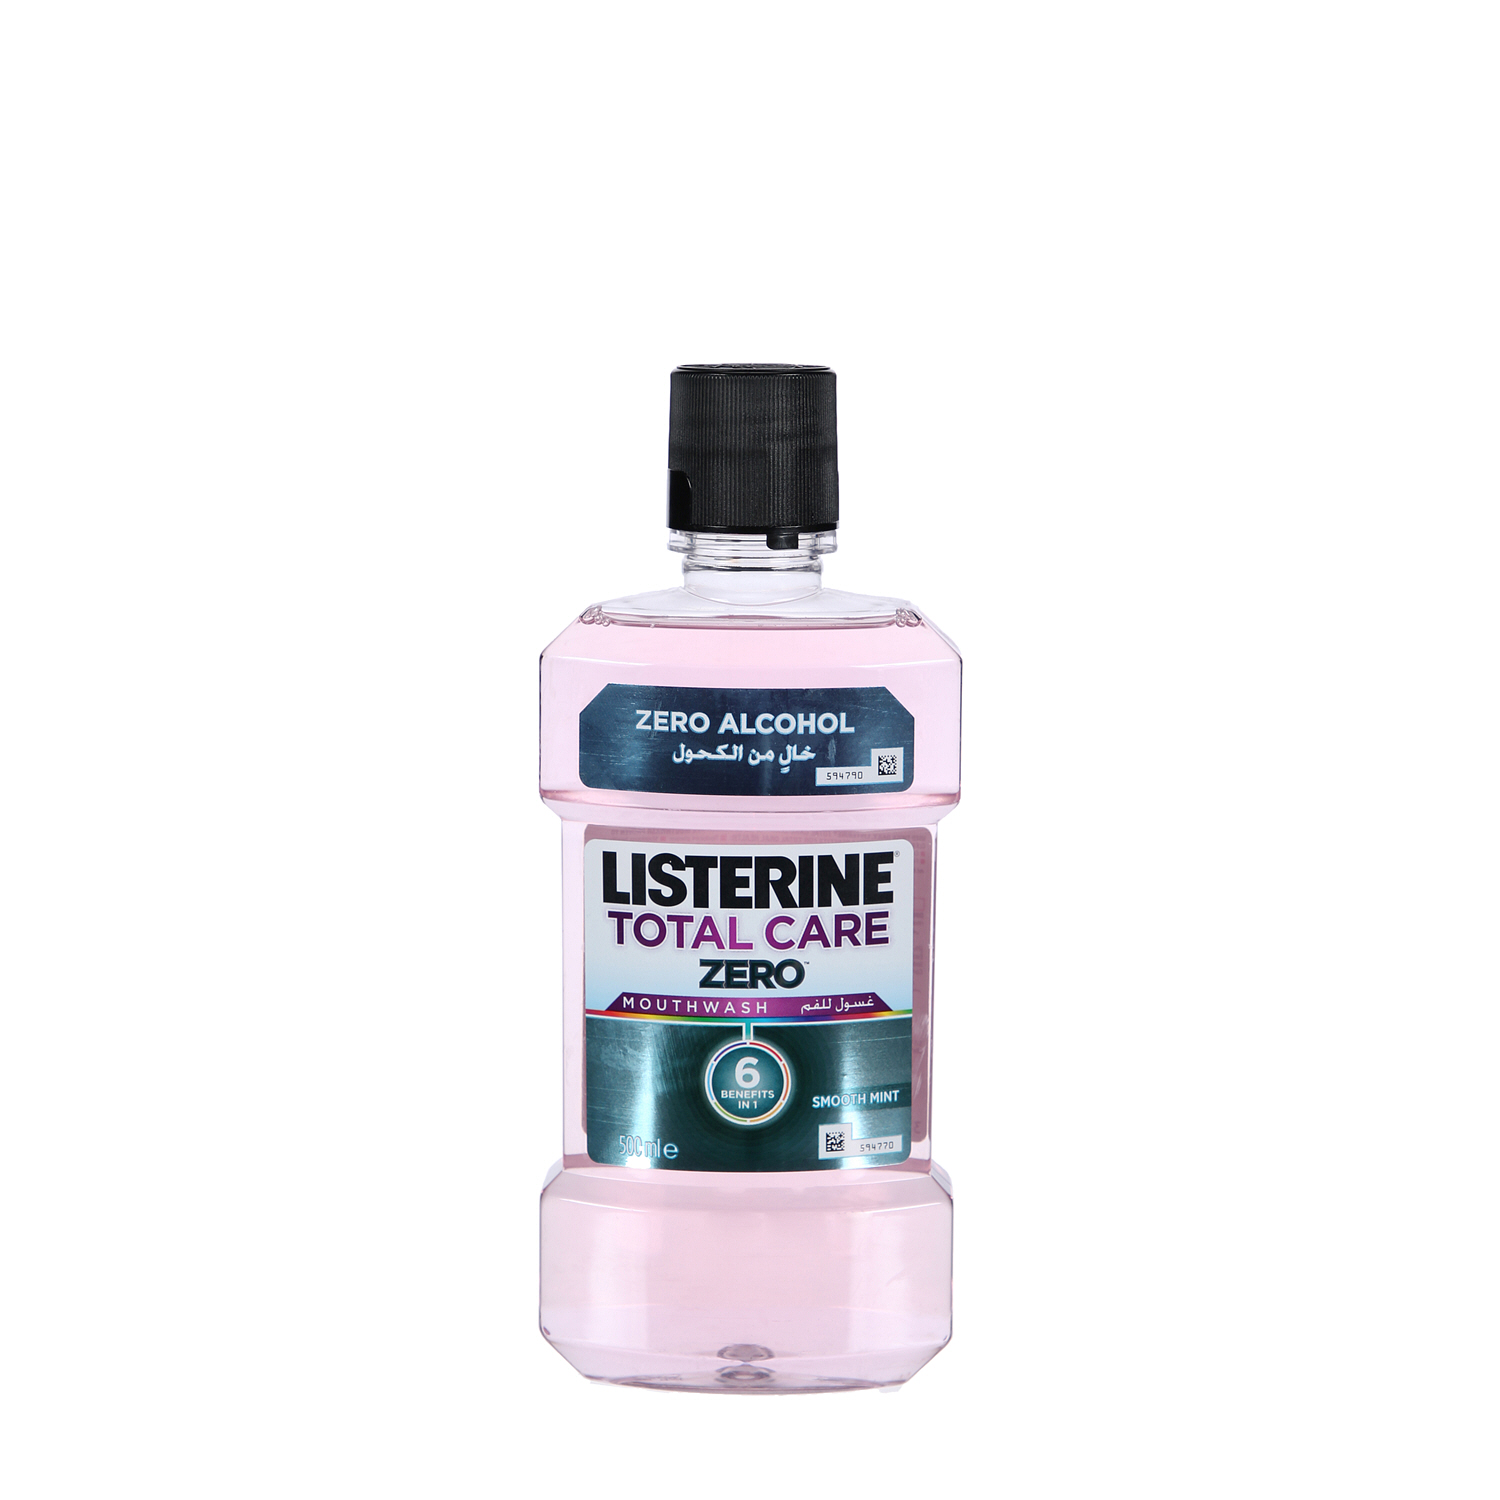 Listerine Mouth Wash Total Care Zero 500 ml